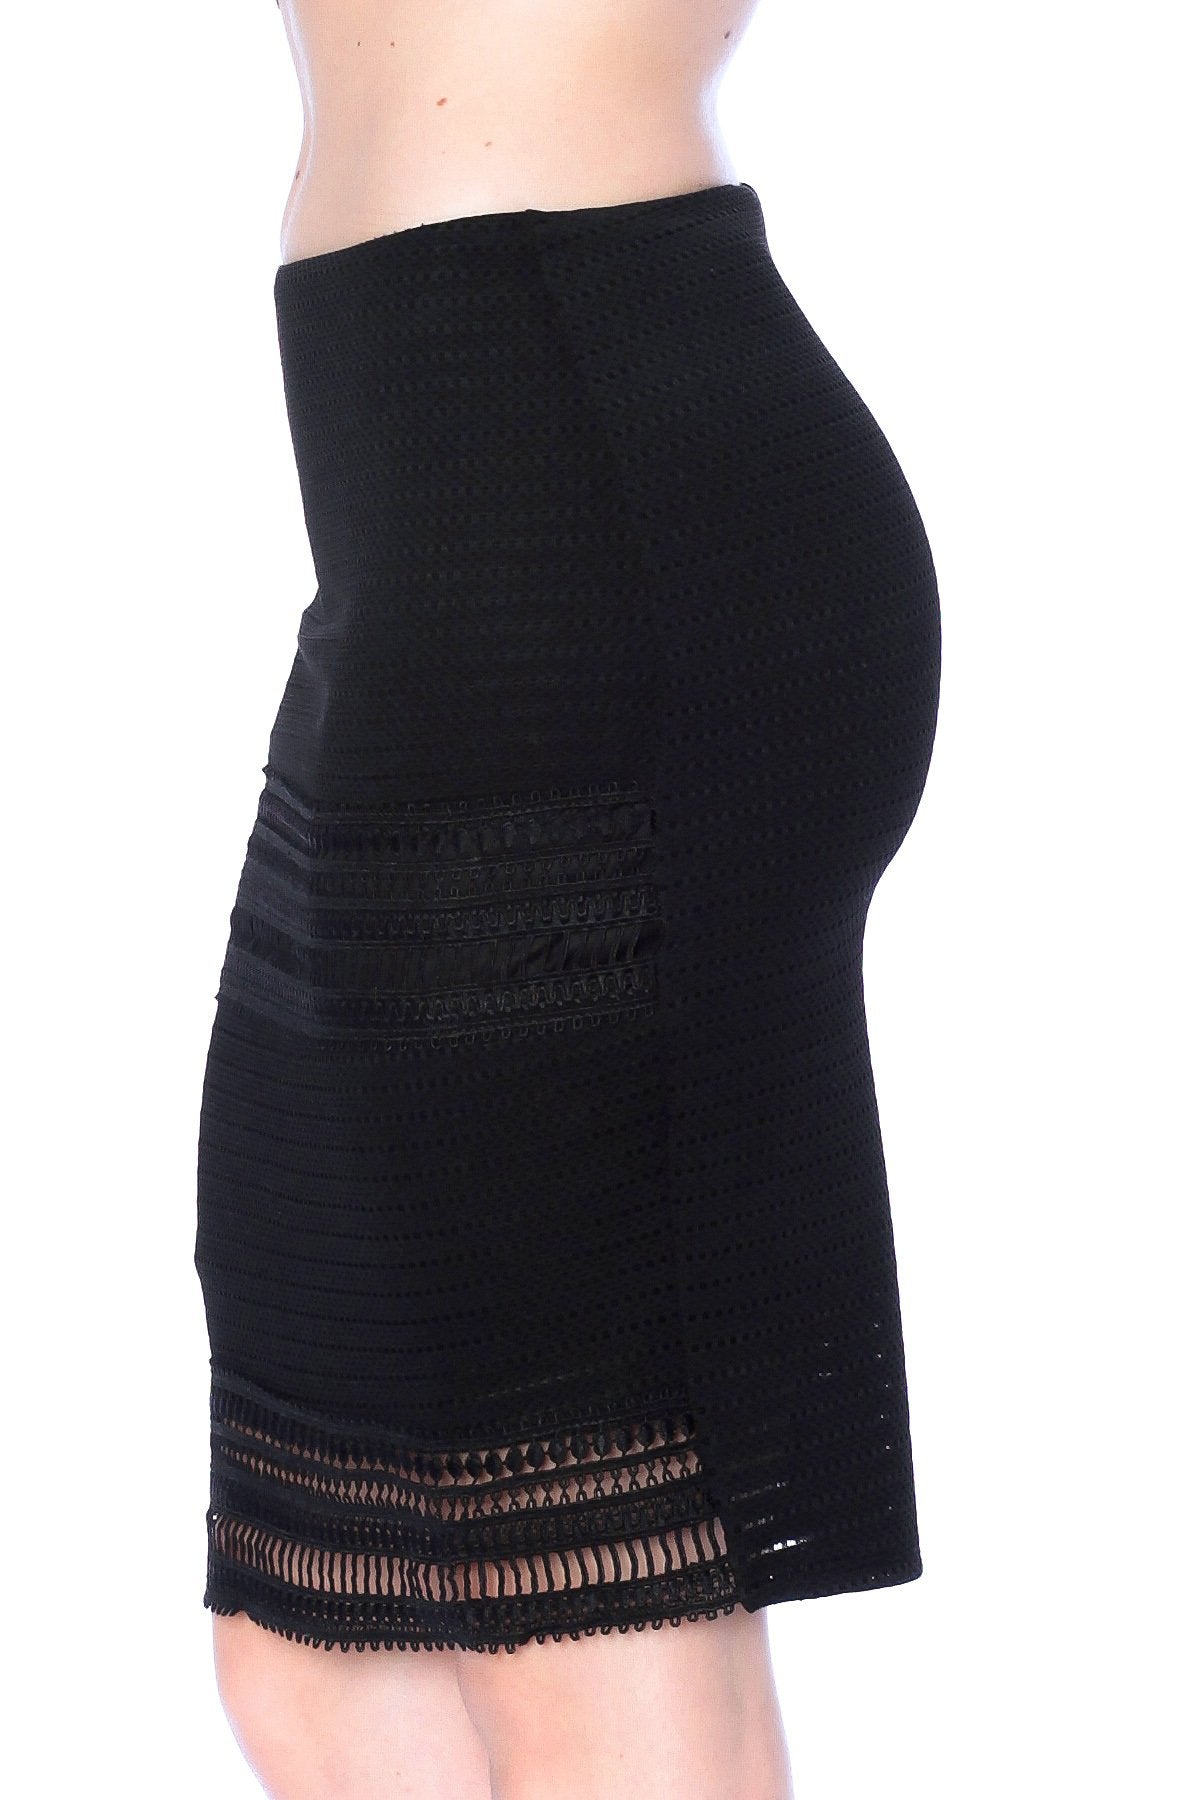 Crotchet knit Long Pencil Skirt with Slit on the back (Medium, Black)